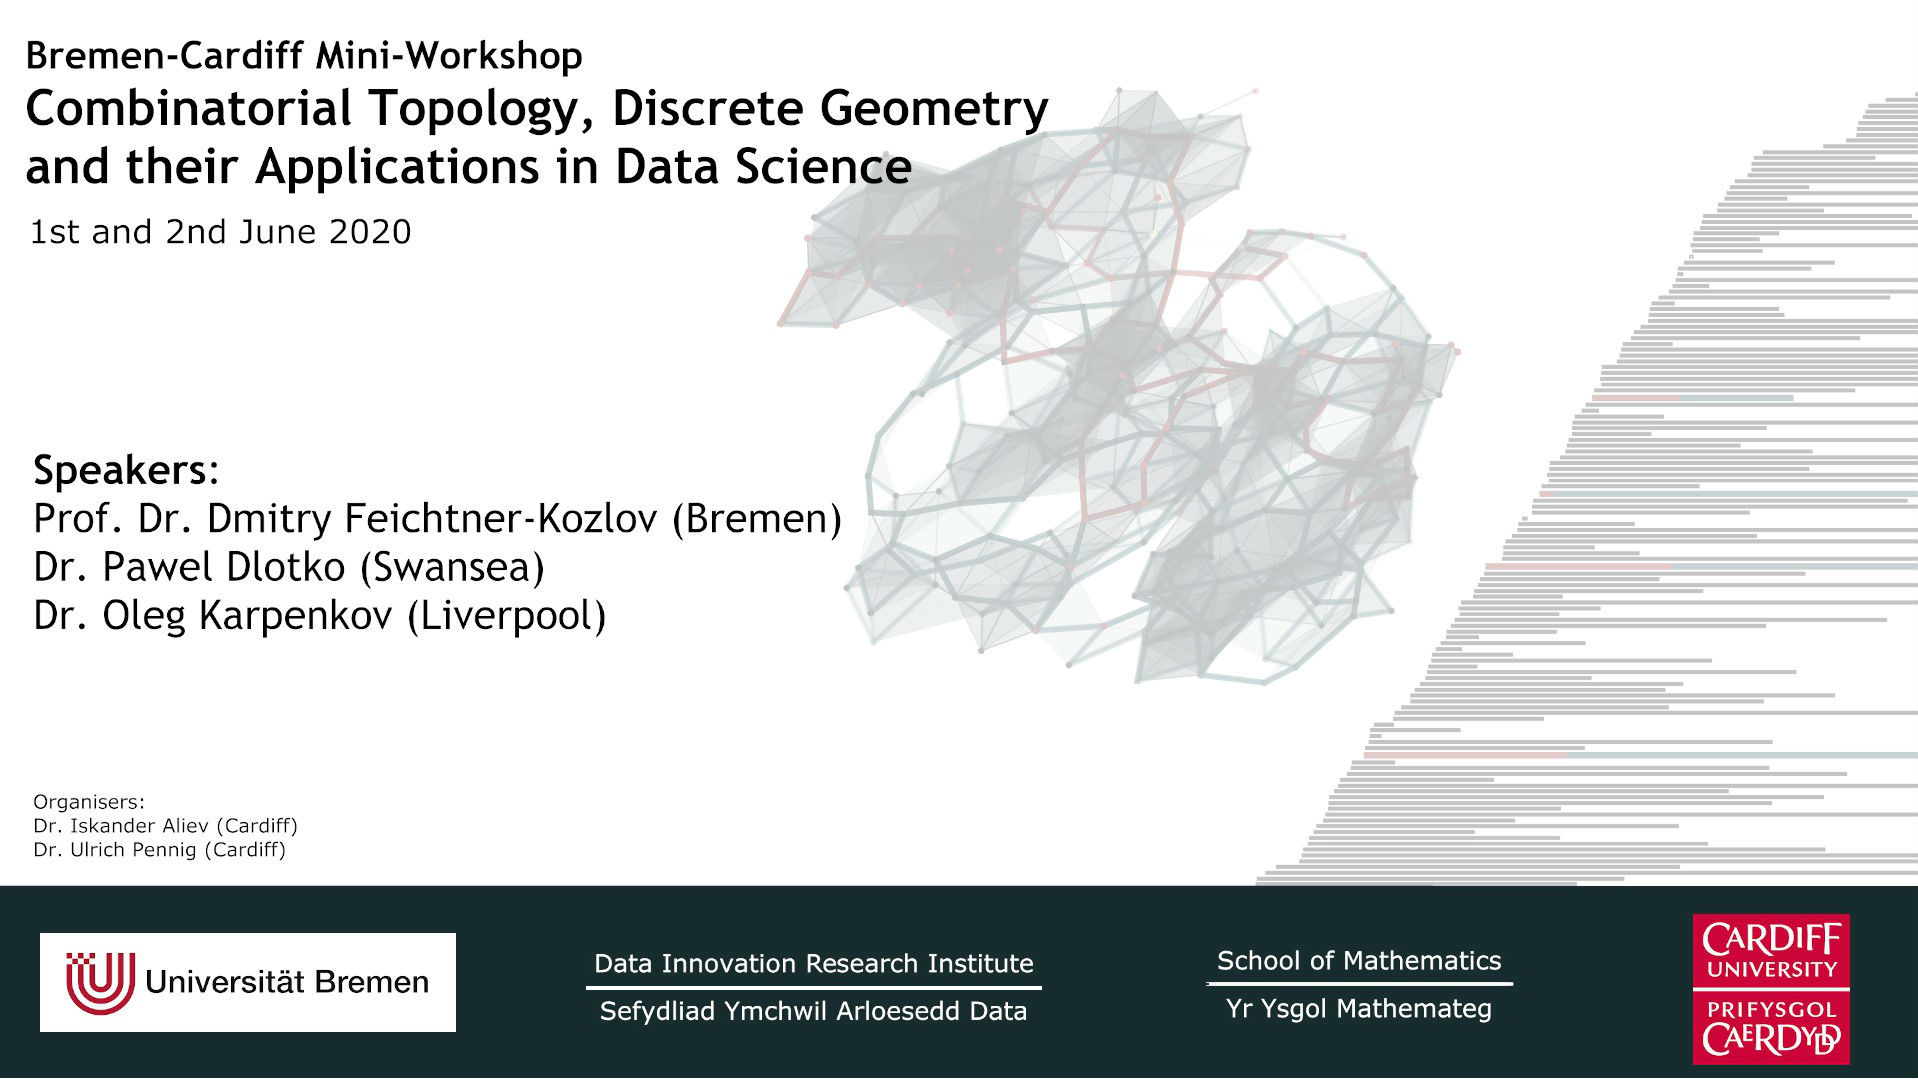 Bremen-Cardiff workshop on Combinatorial Topology, Discrete Geometry